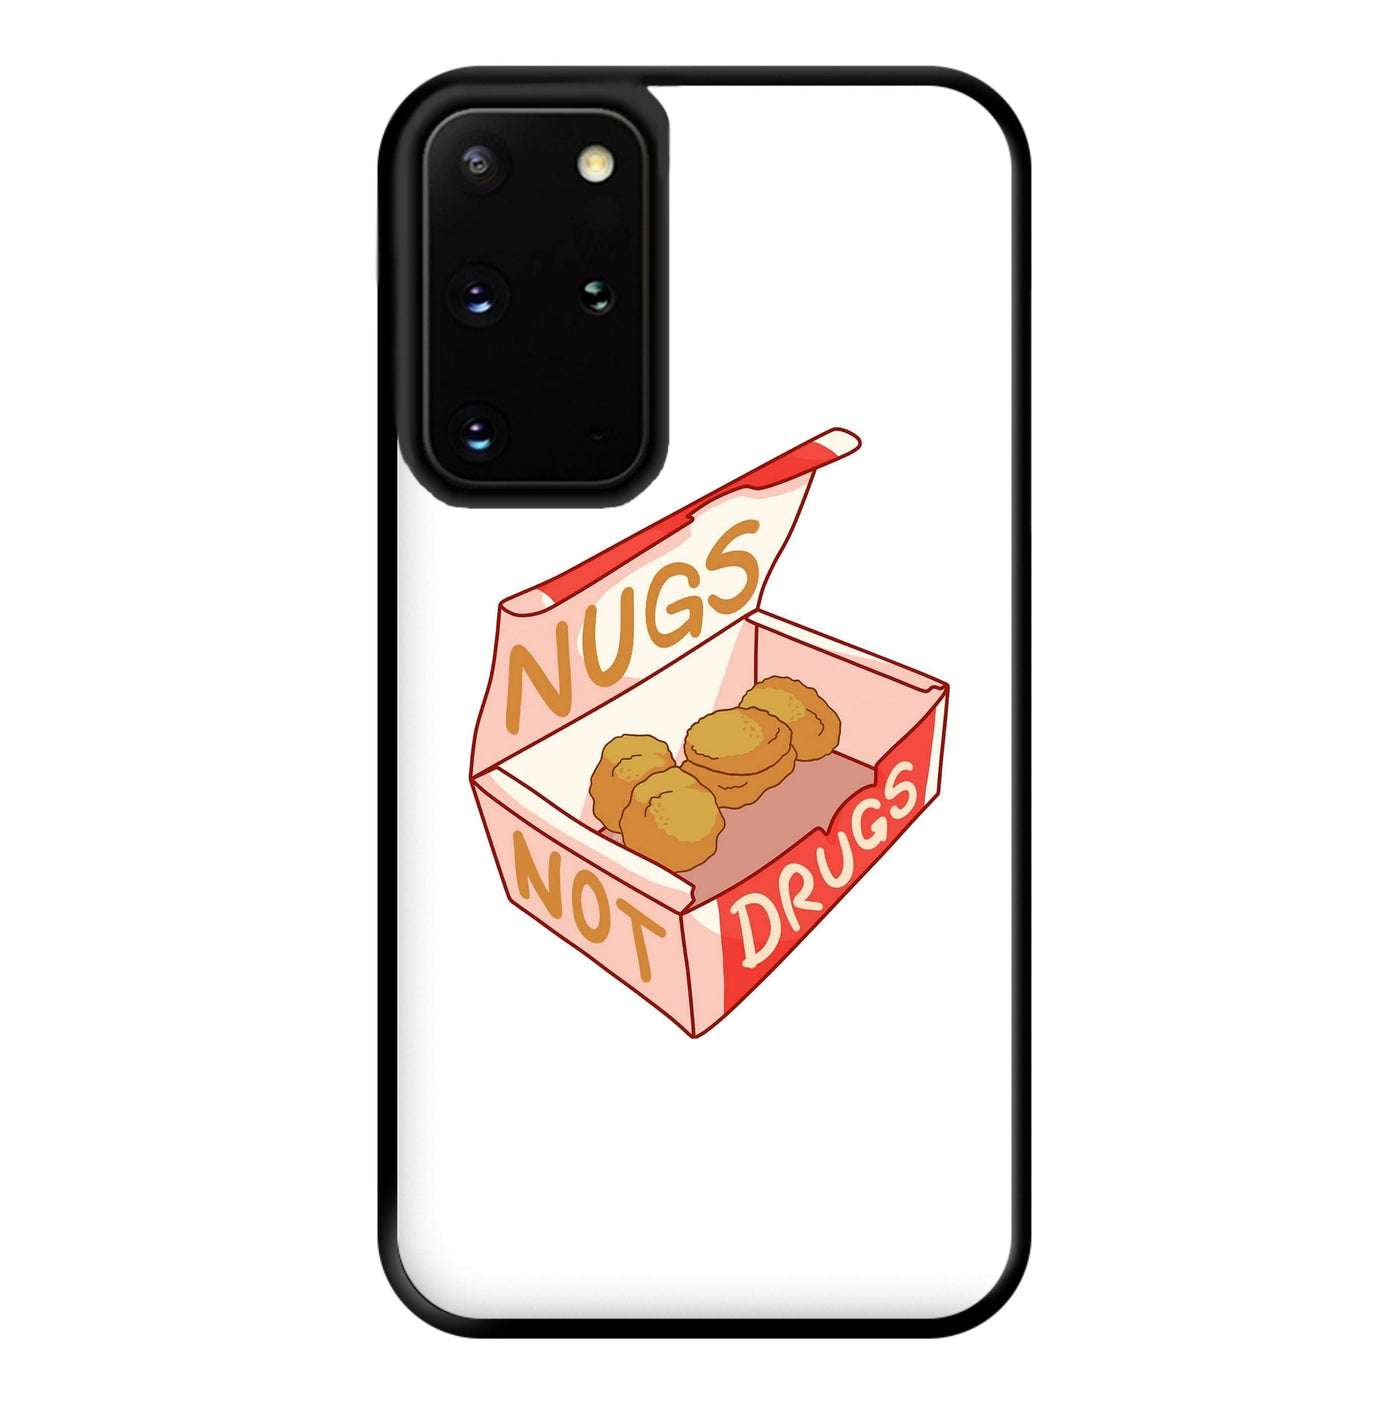 Nugs not Drugs Tumblr Style Phone Case